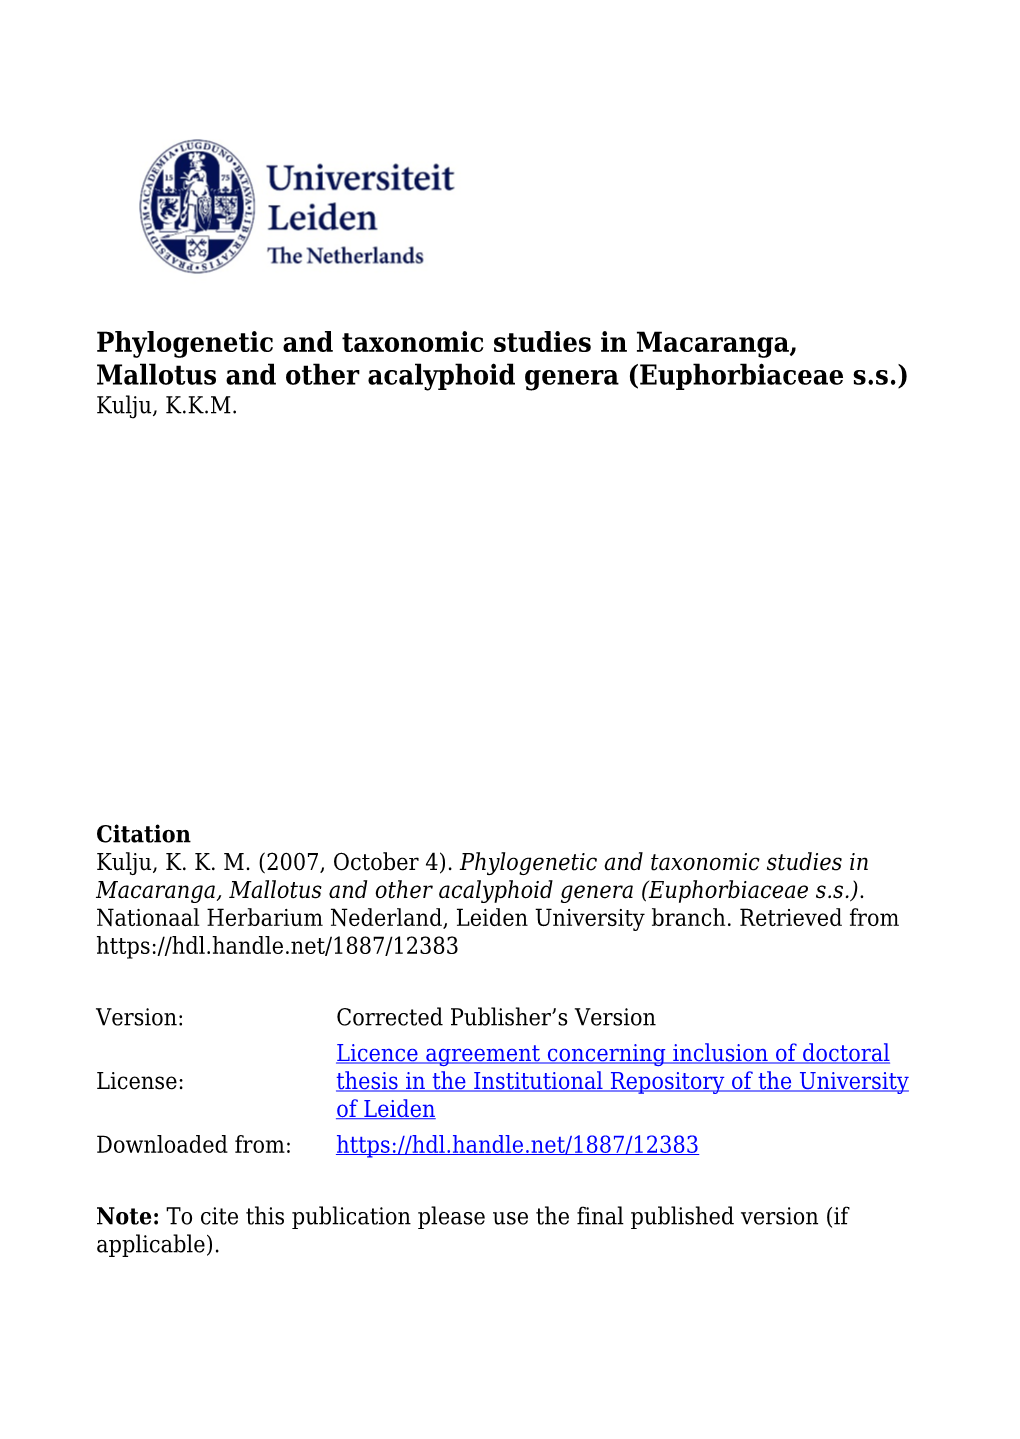 Phylogenetic and Taxonomic Studies in Macaranga, Mallotus and Other Acalyphoid Genera (Euphorbiaceae S.S.) Kulju, K.K.M